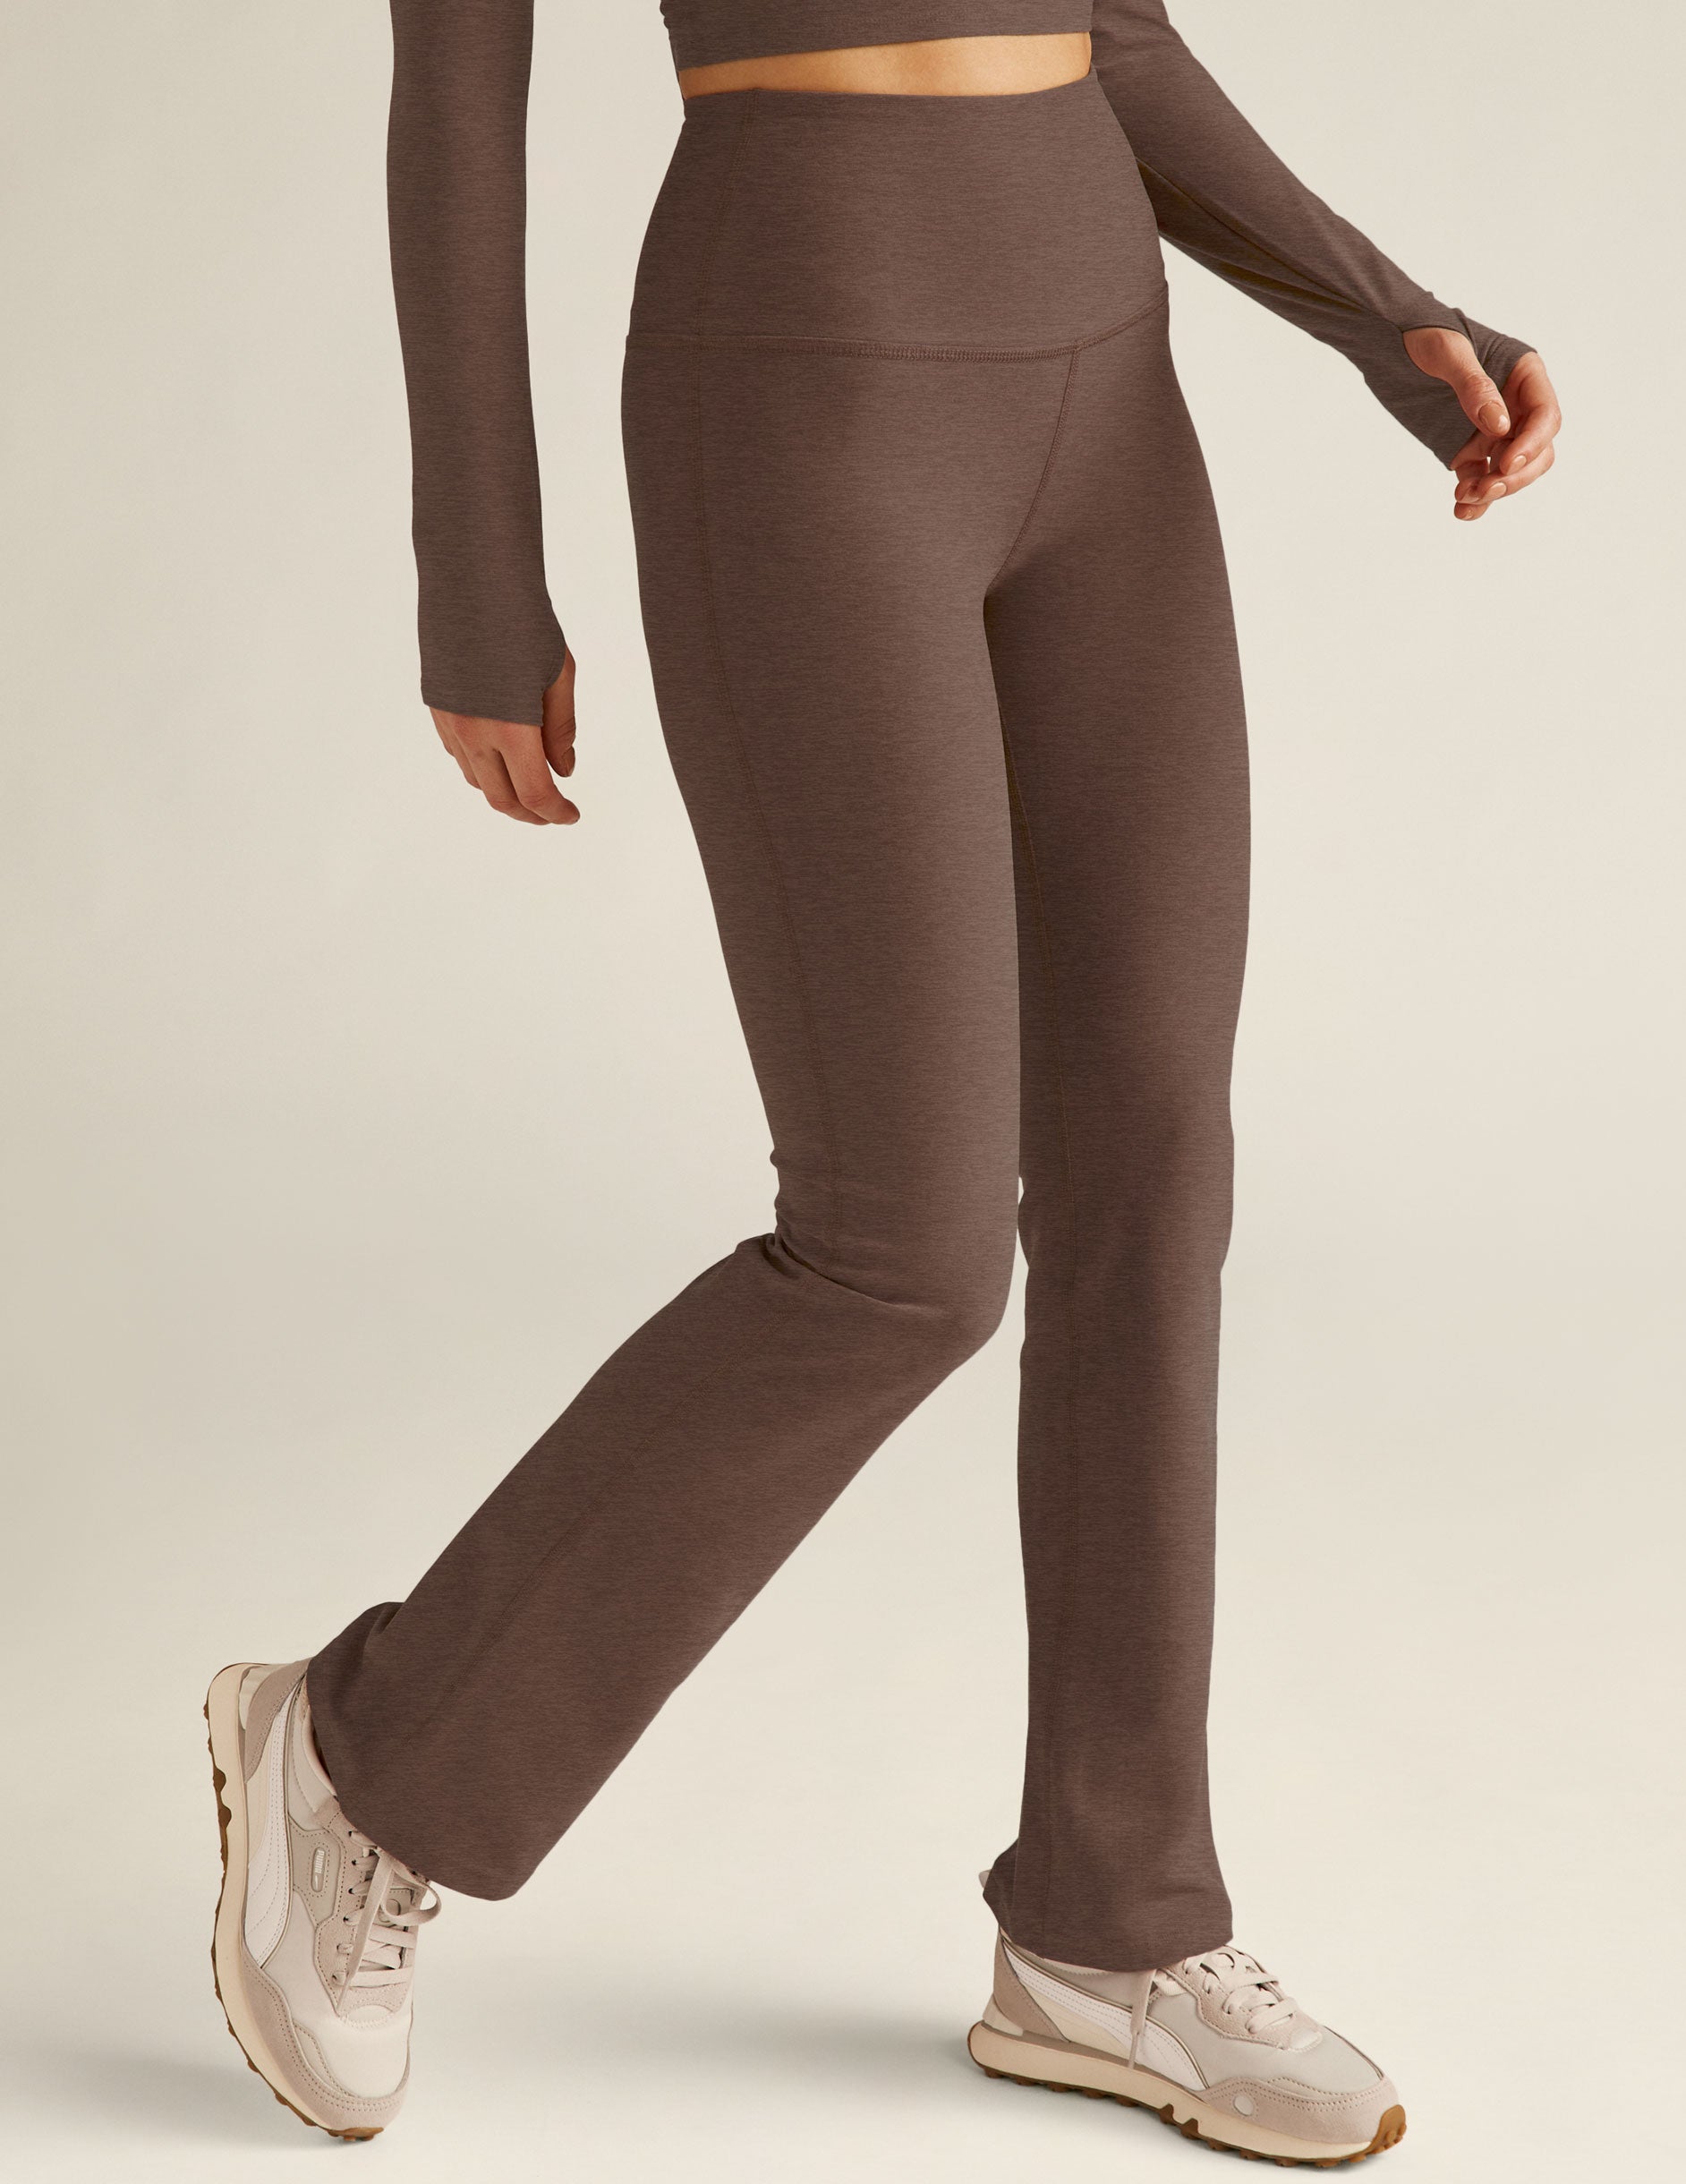 brown high-waisted bootcut pants. 